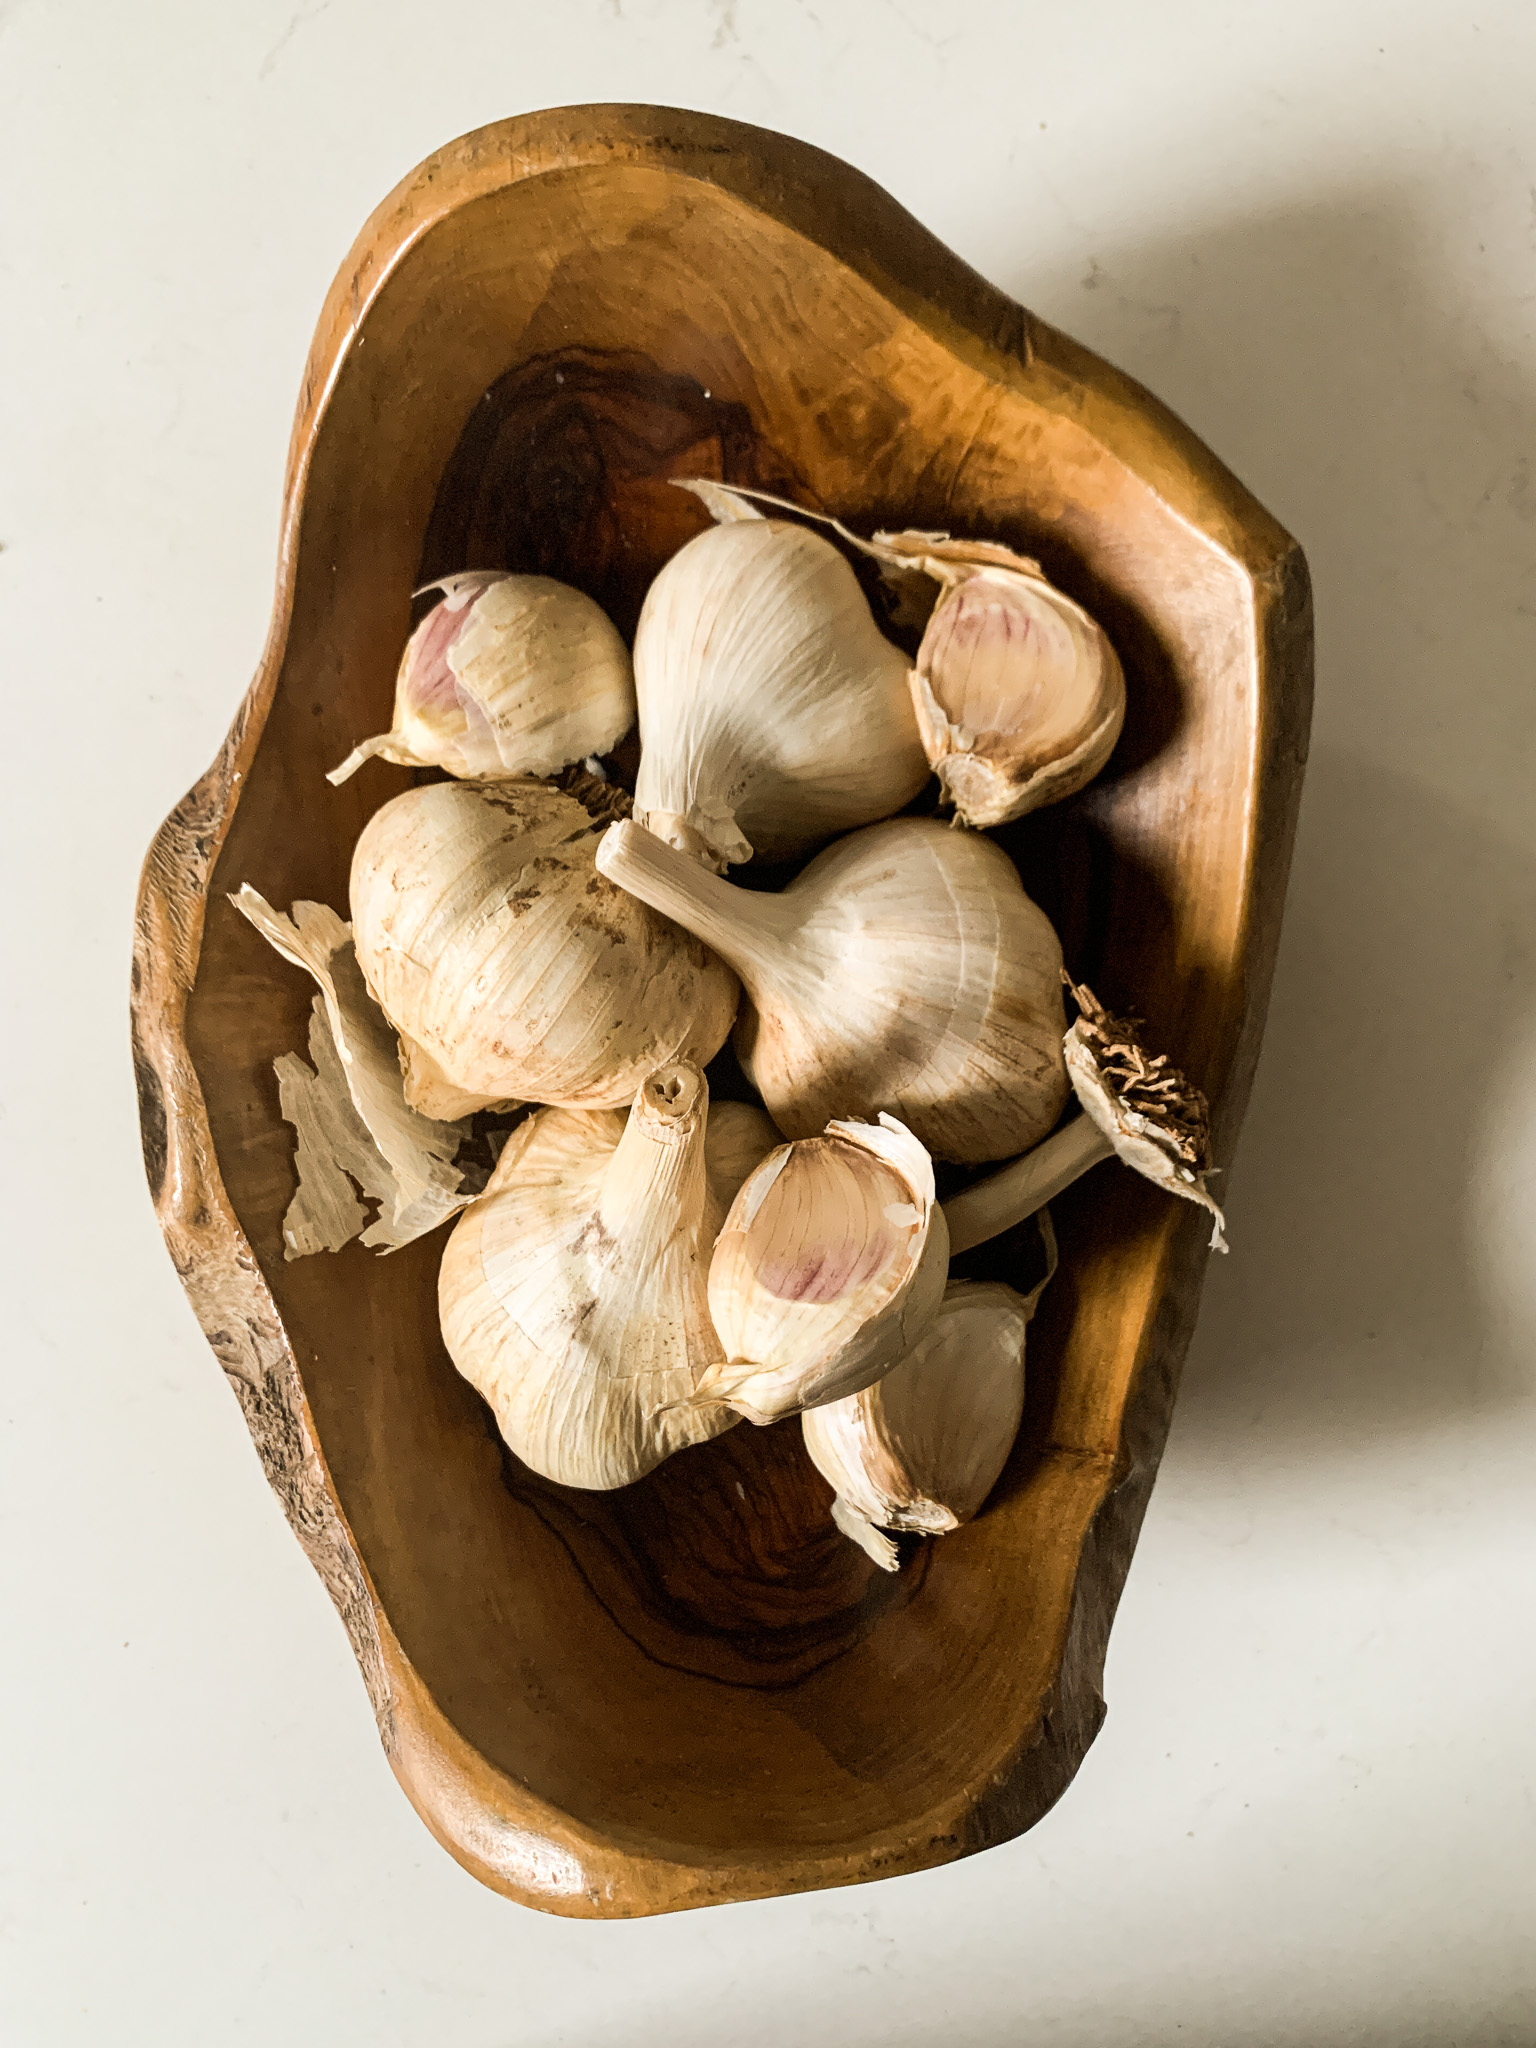 olive wood bowl of garlic